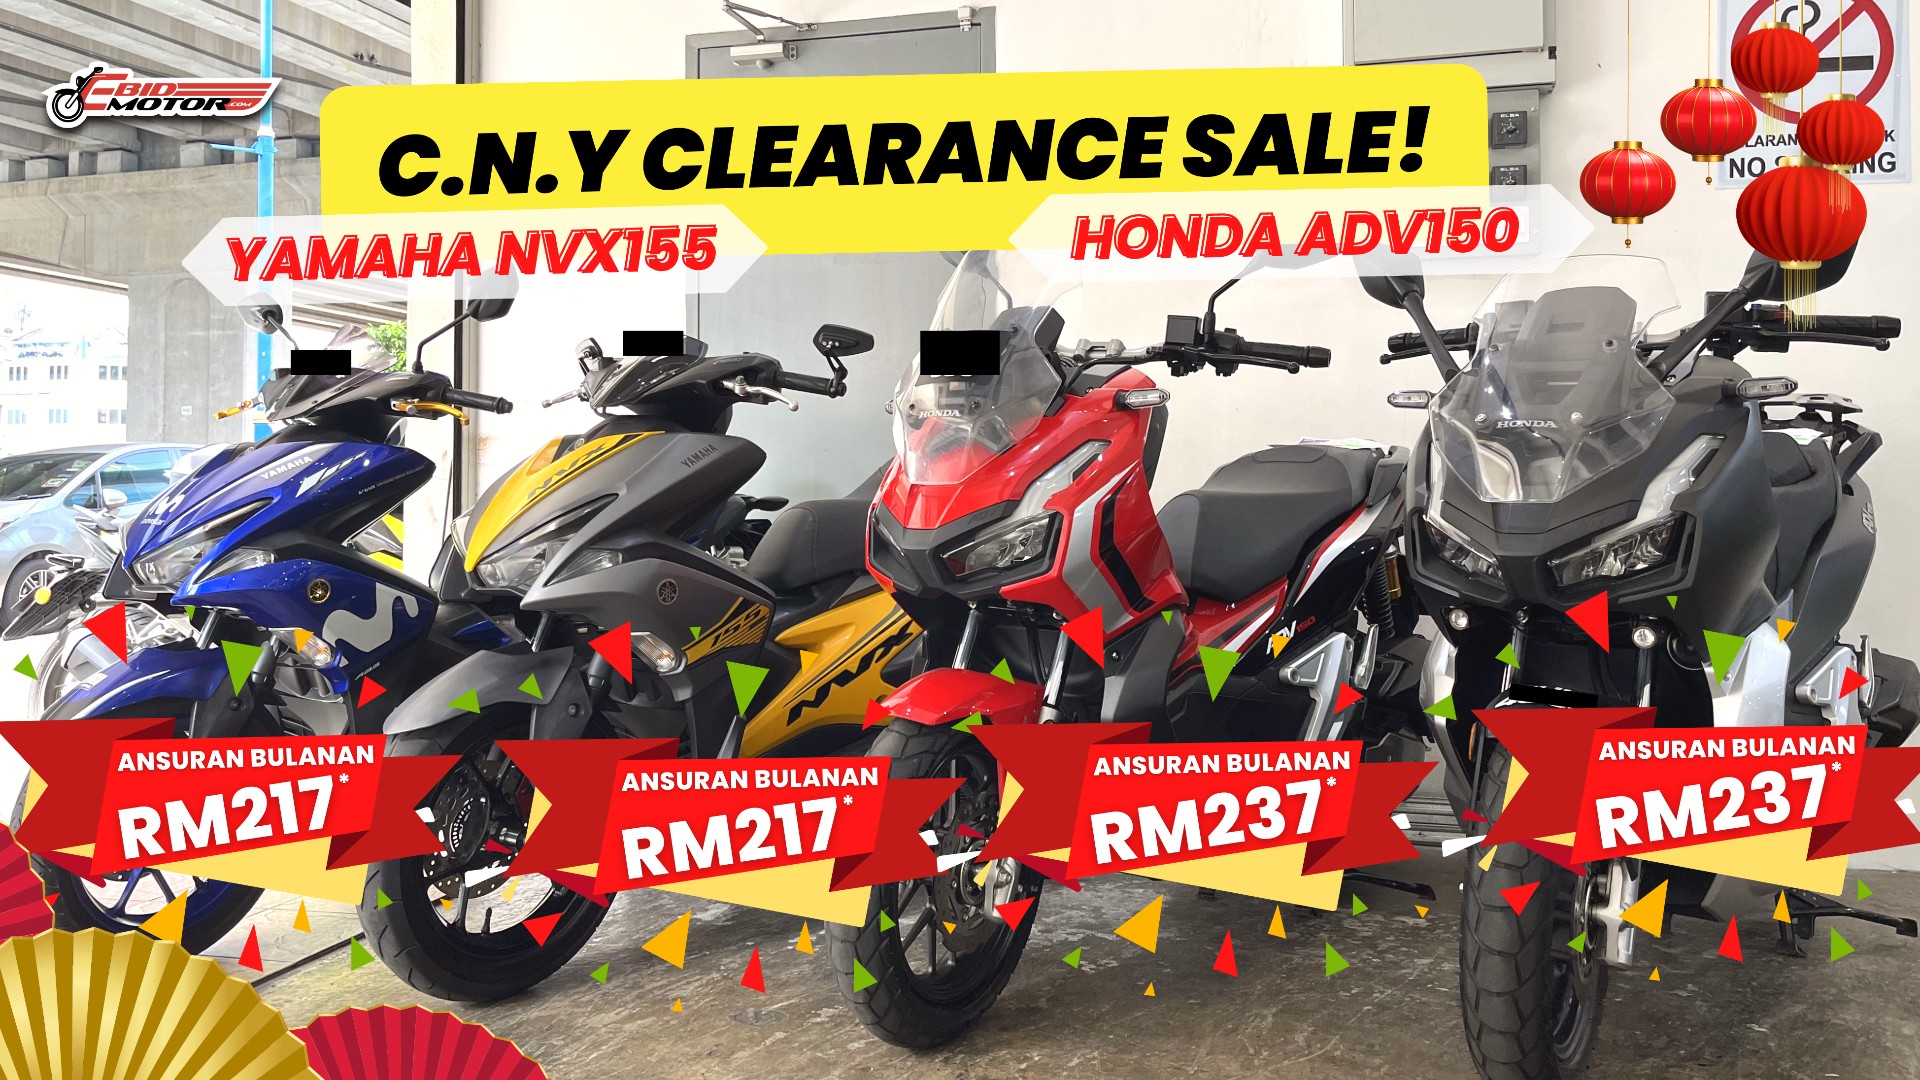 NVX 155 & ADV 150 CNY Stock Clearance! Tawaran Harga TERENDAH Di Lembah Klang!